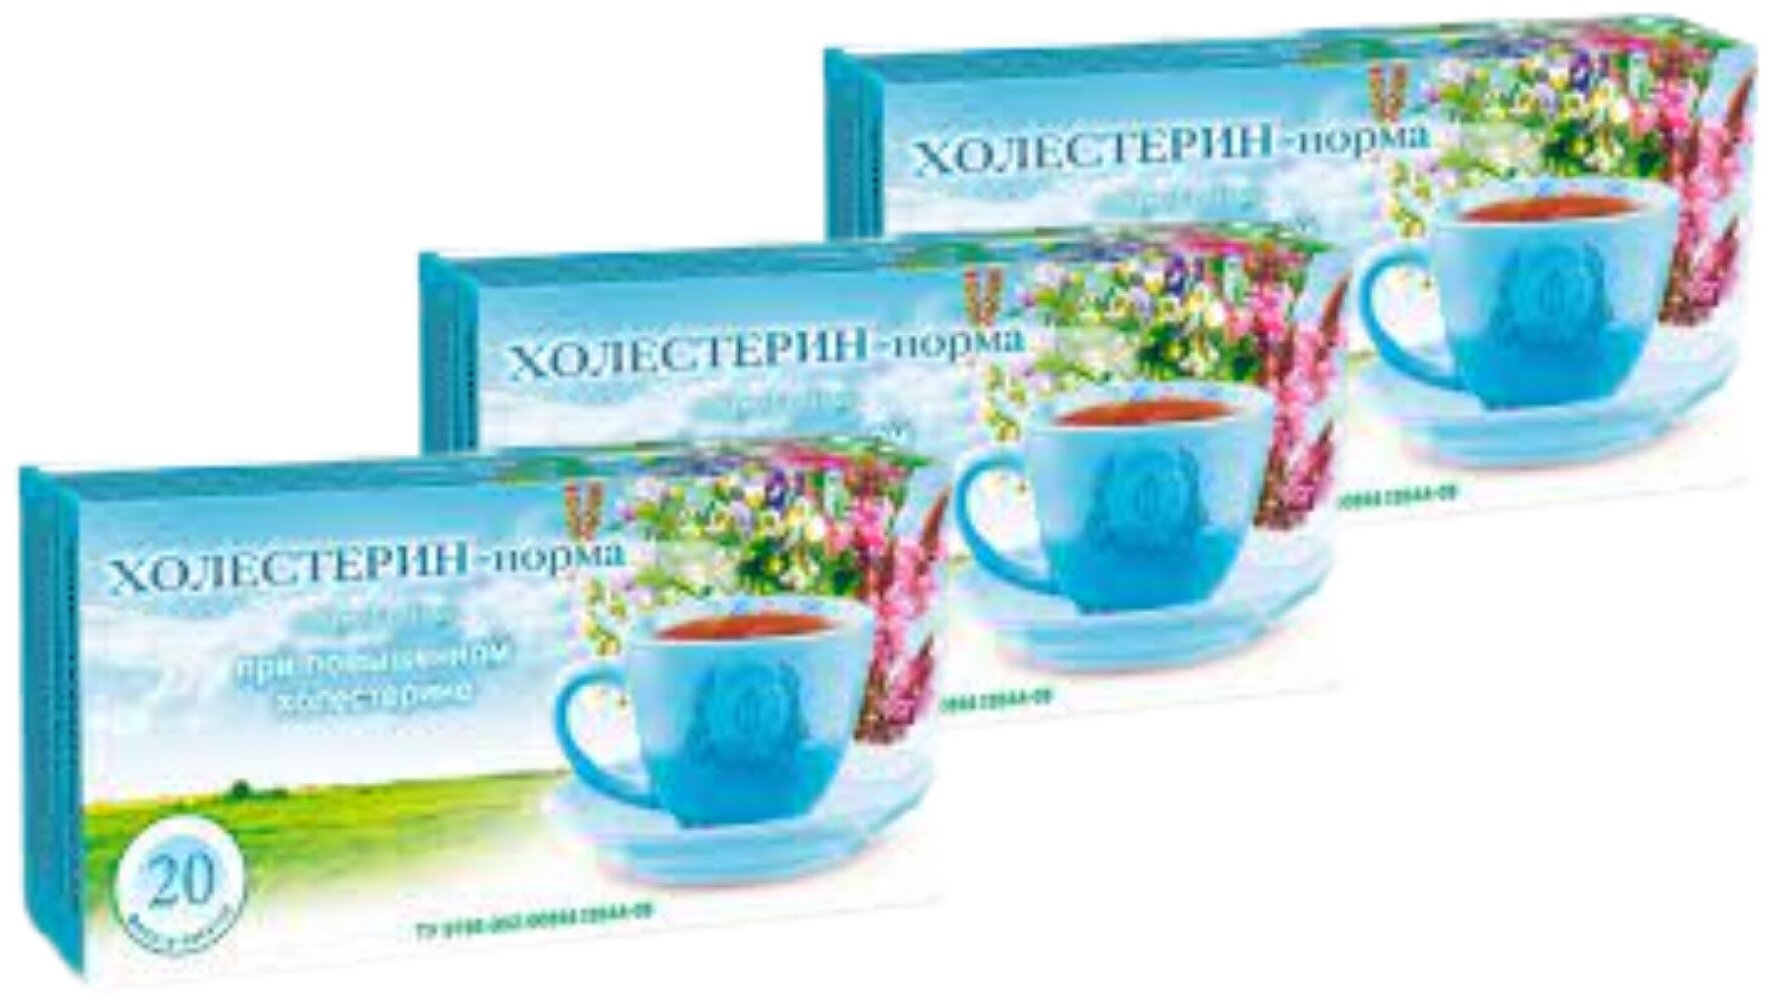 Чай "Рецепты Гордеева" Холестерин-норма ф/п 175 гр №20 (3 шт в наборе)